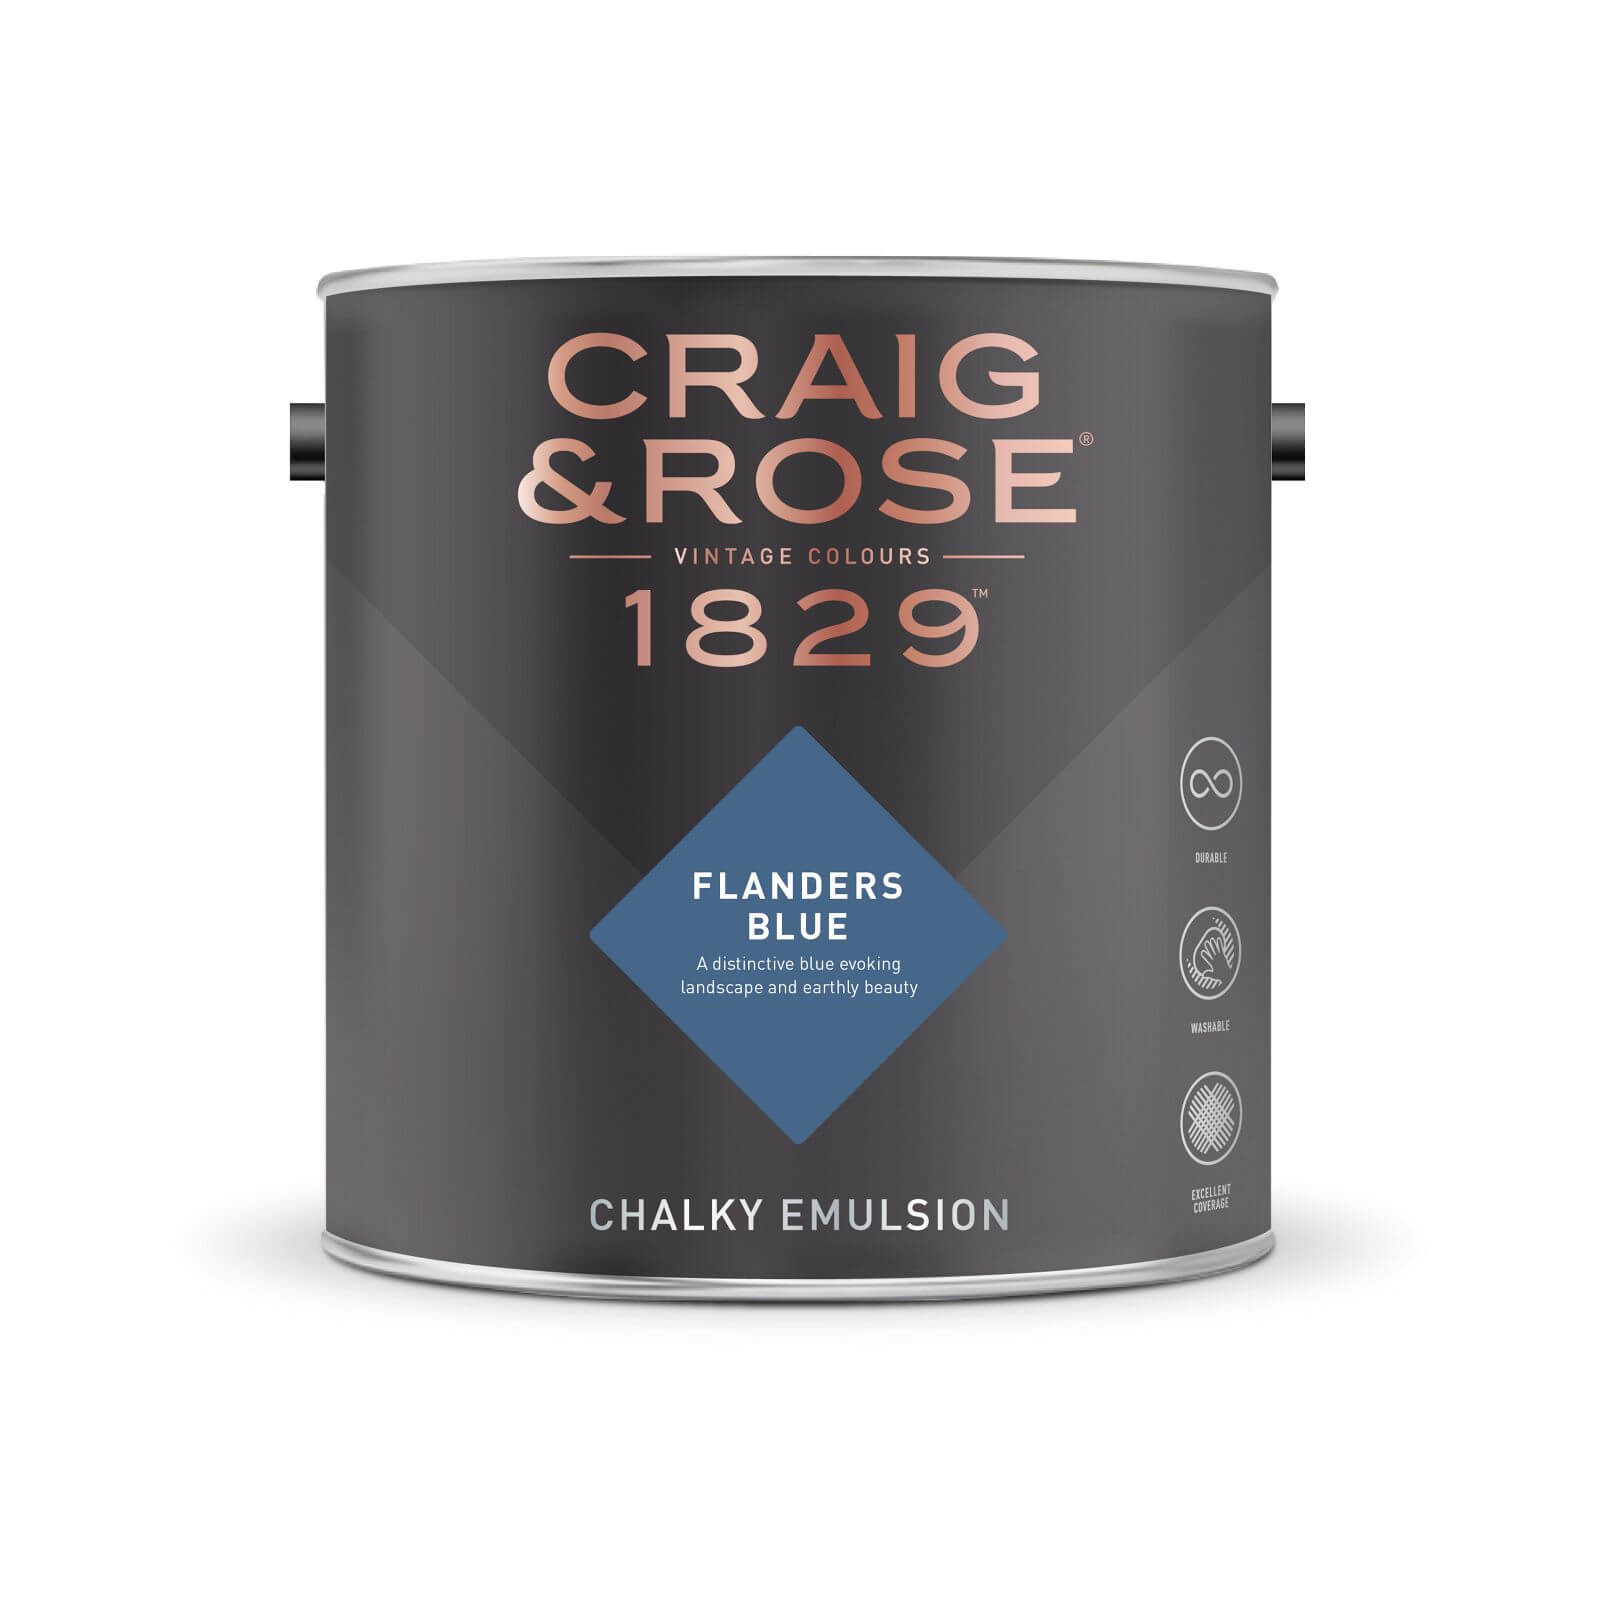 Craig & Rose 1829 Chalky Emulsion Paint Flanders Blue - Tester 50ml